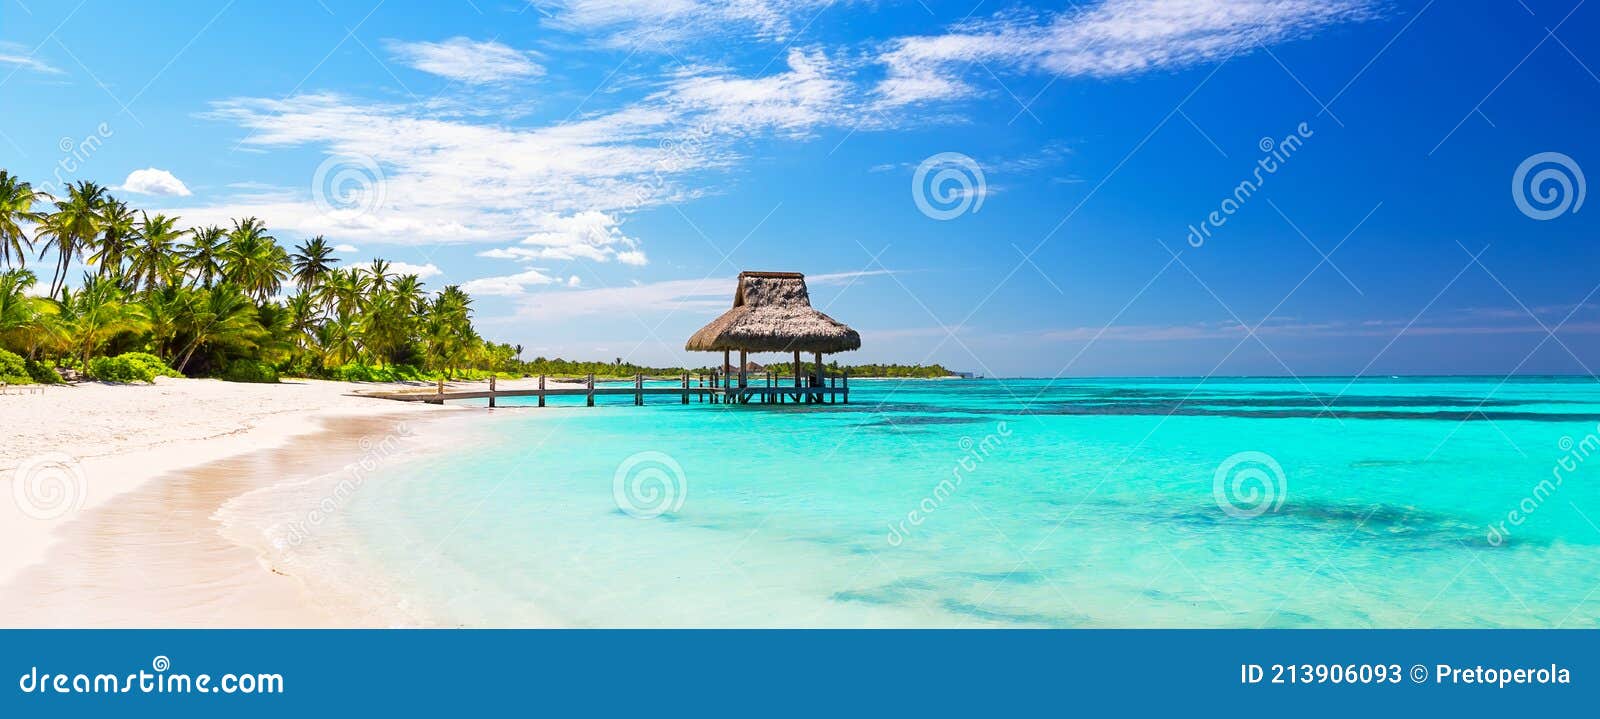 panorama of beautiful gazebo on the tropical white sandy beach in punta cana, dominican republic